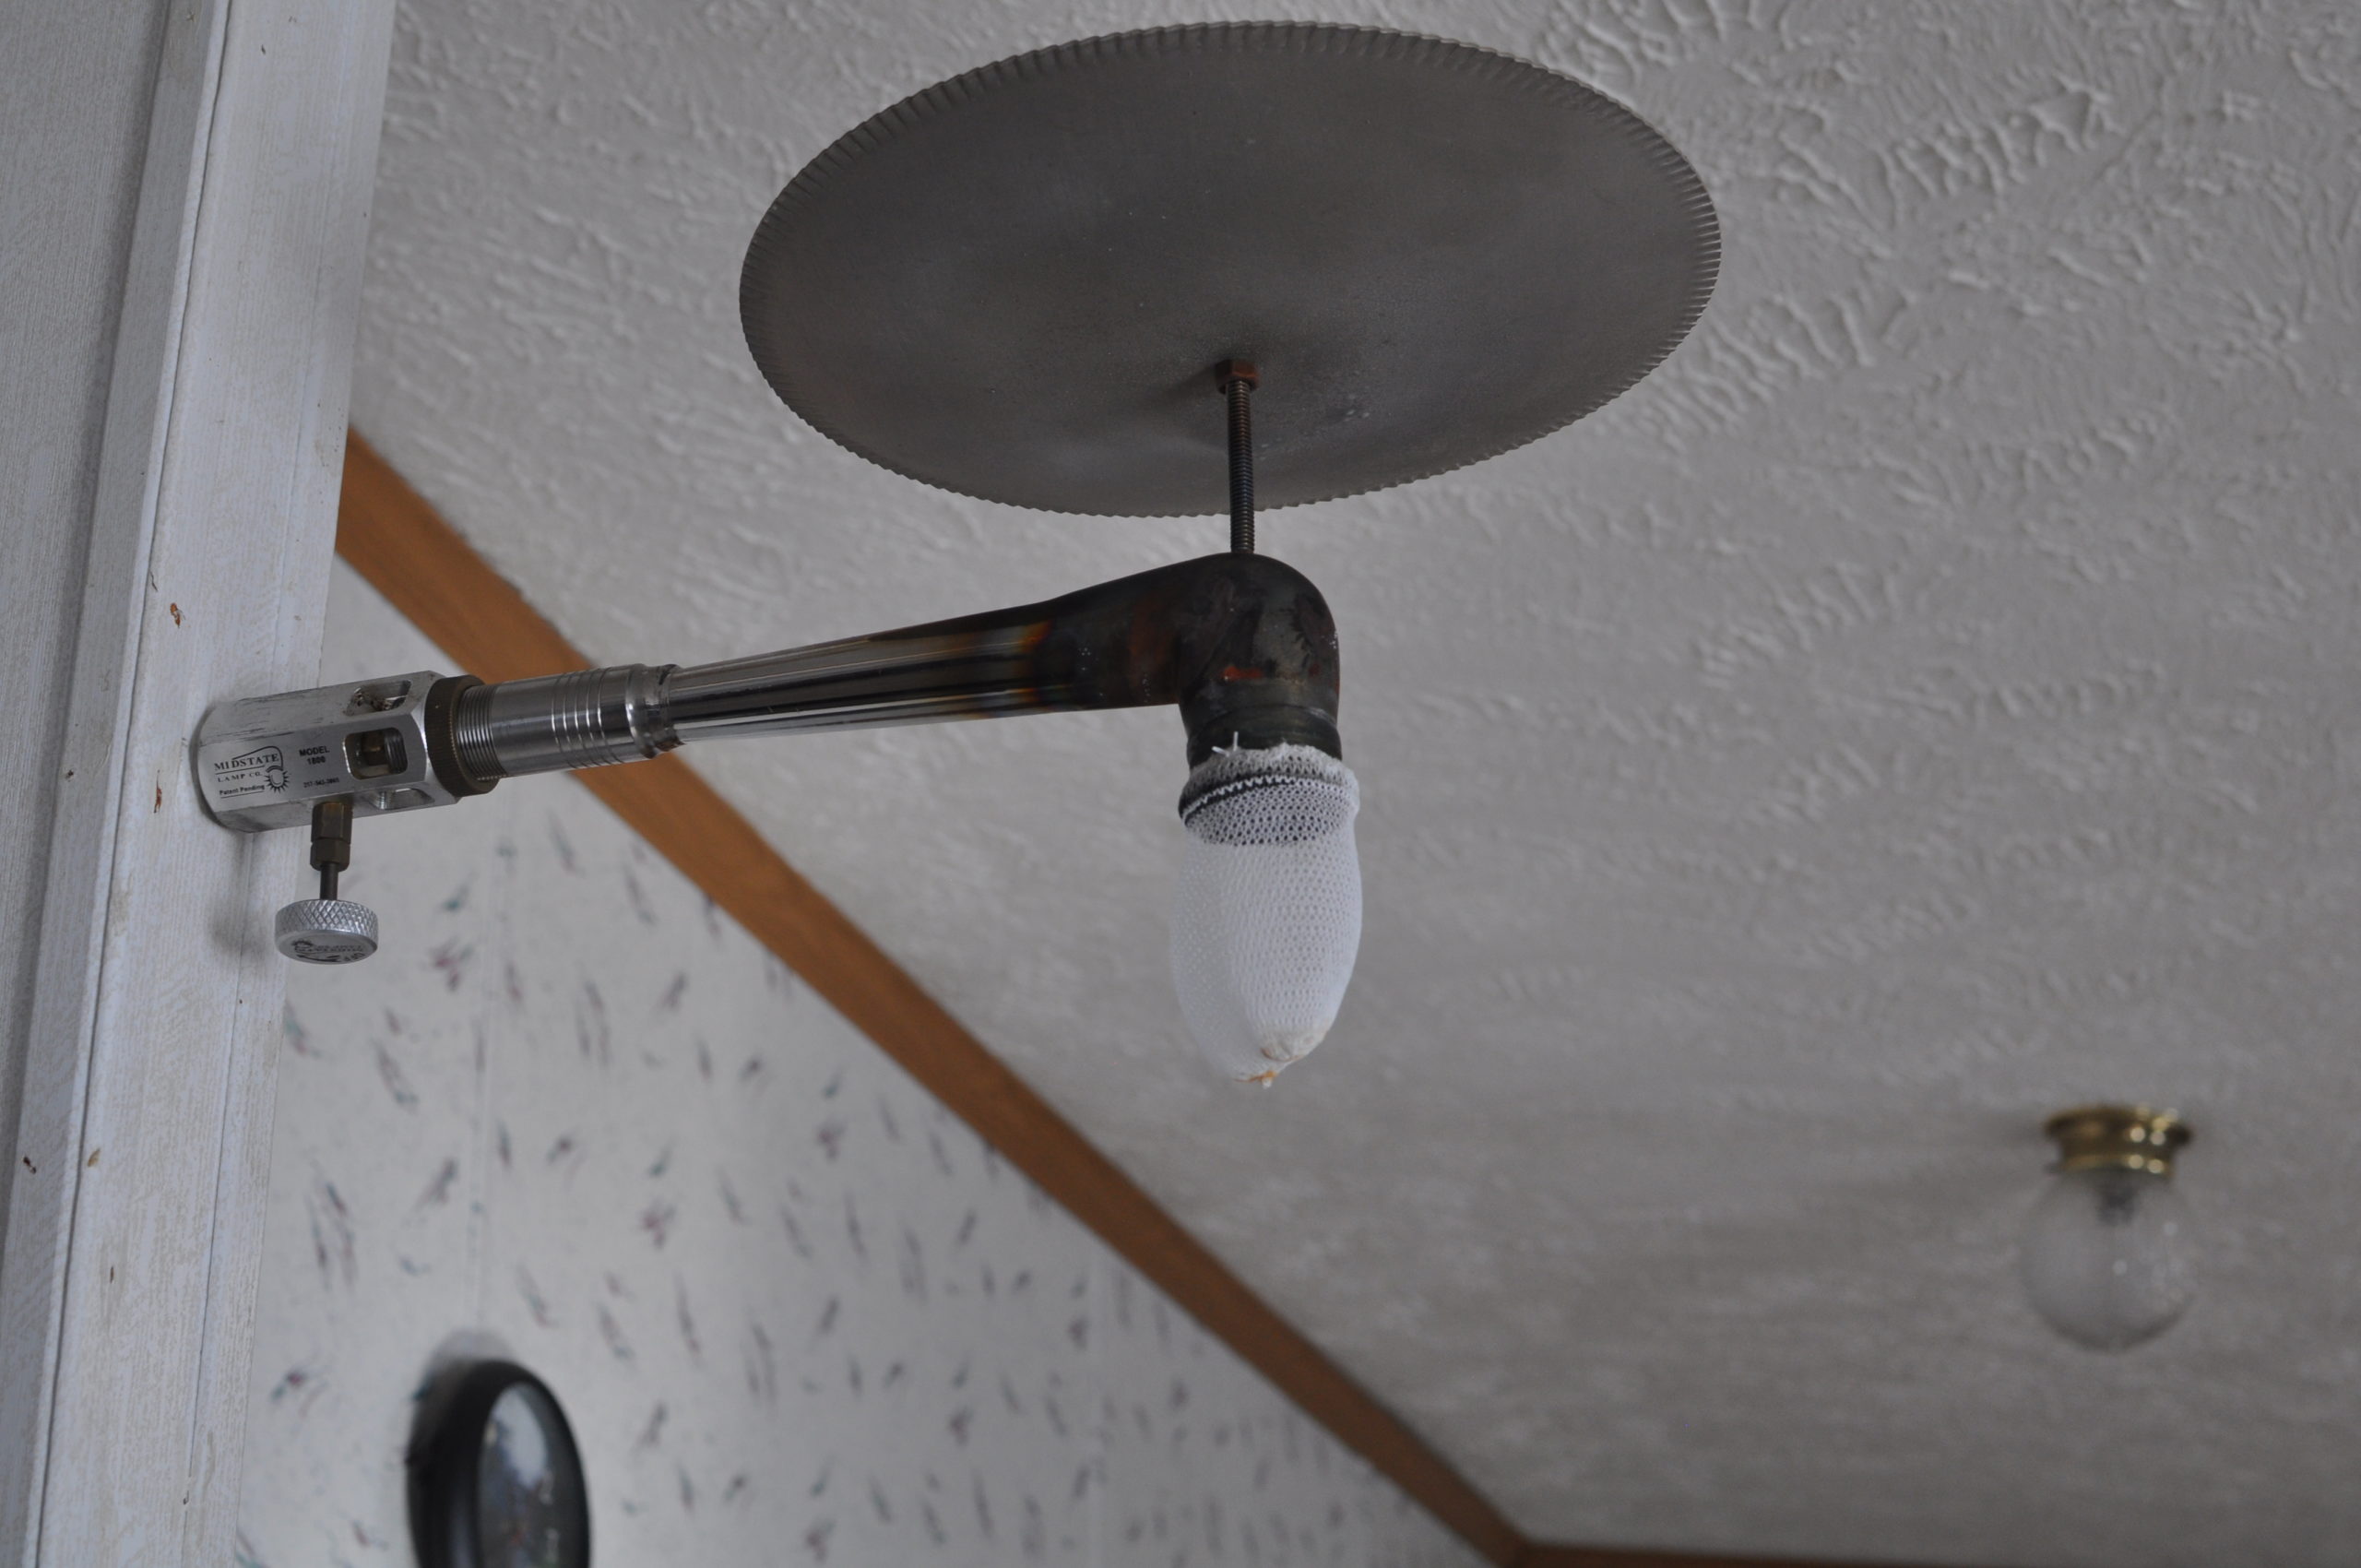 Amish gas light bulb